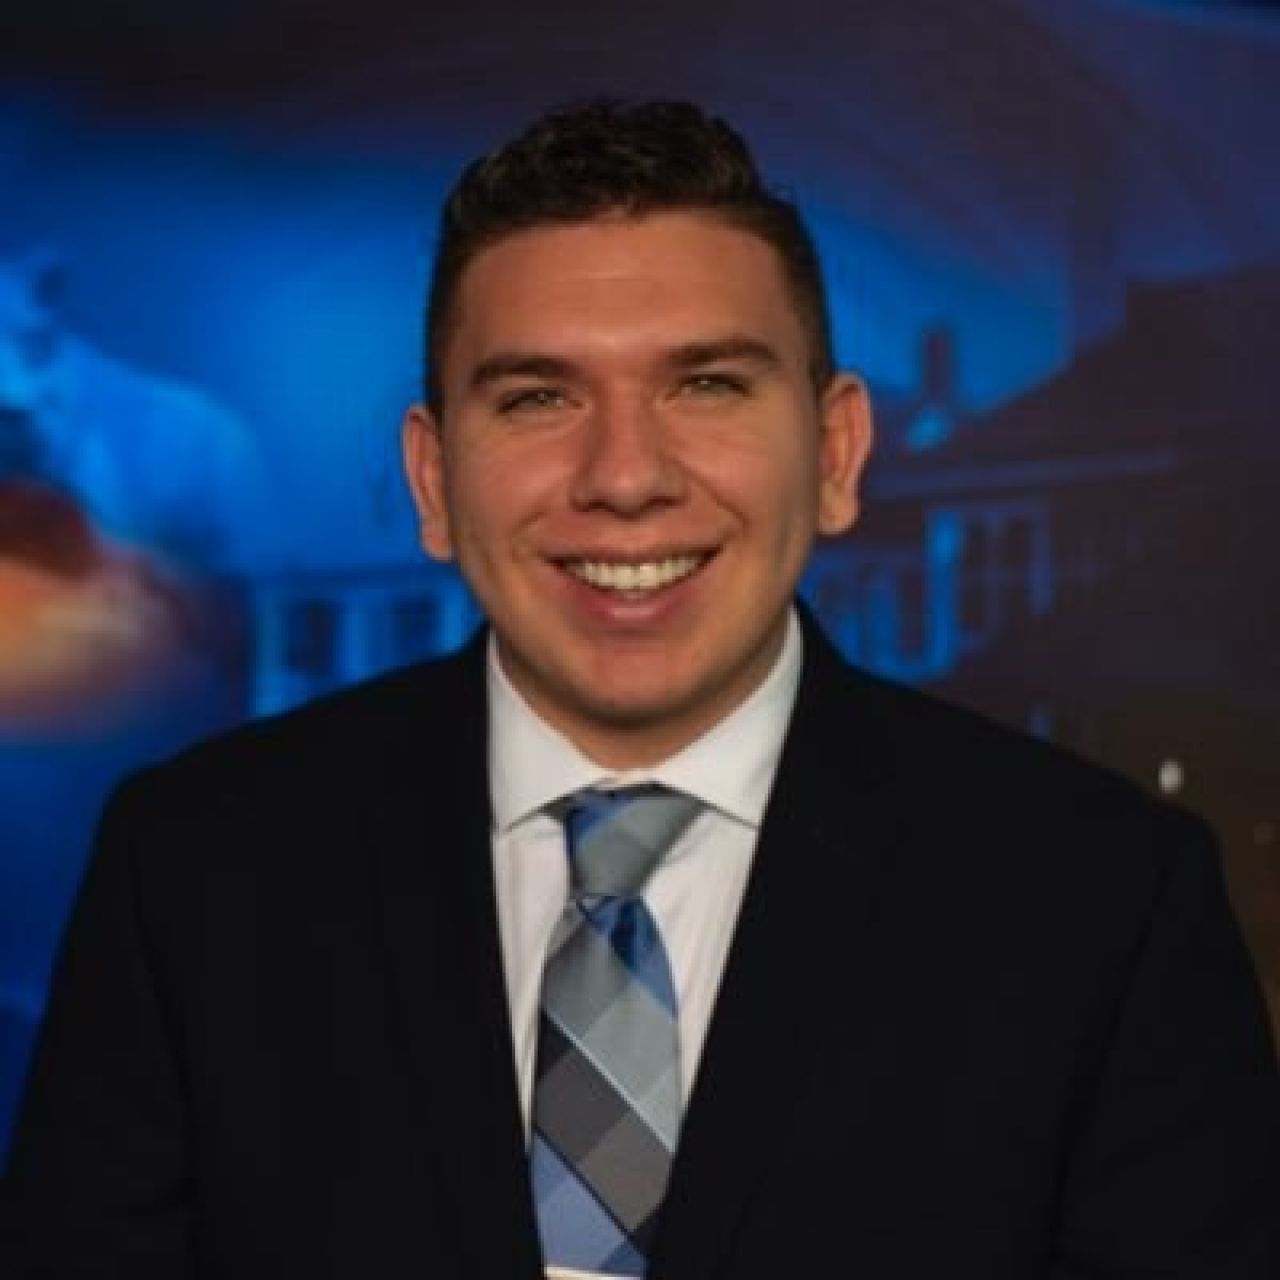 Carlos Flores portrait in TV studio